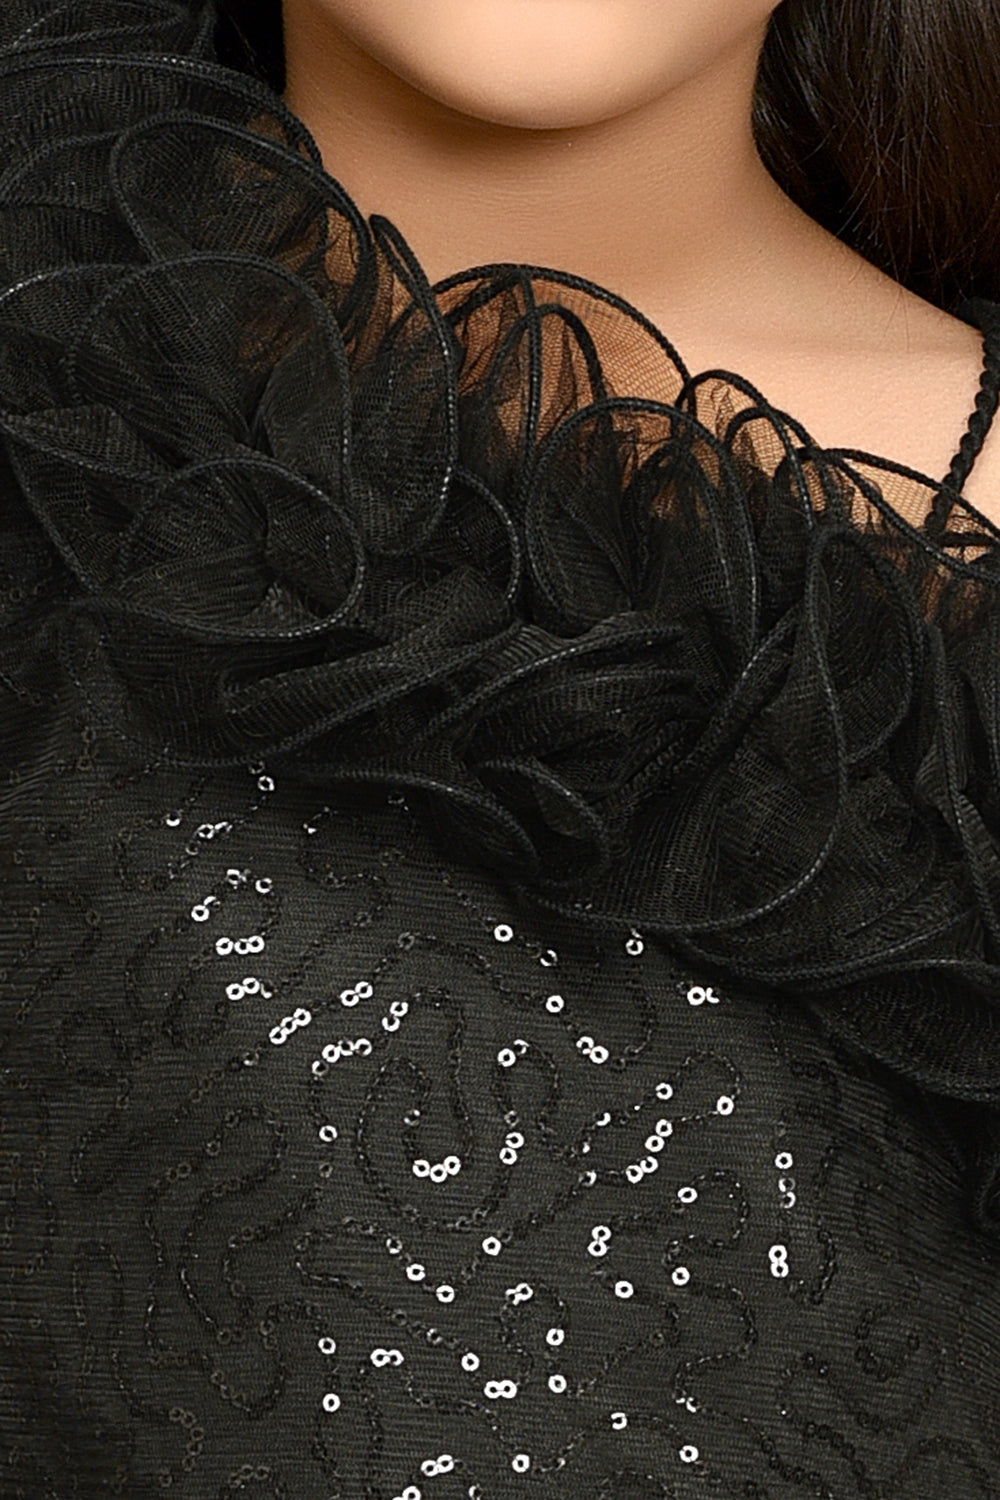 Sequined Aline Ruffled Dress -Black